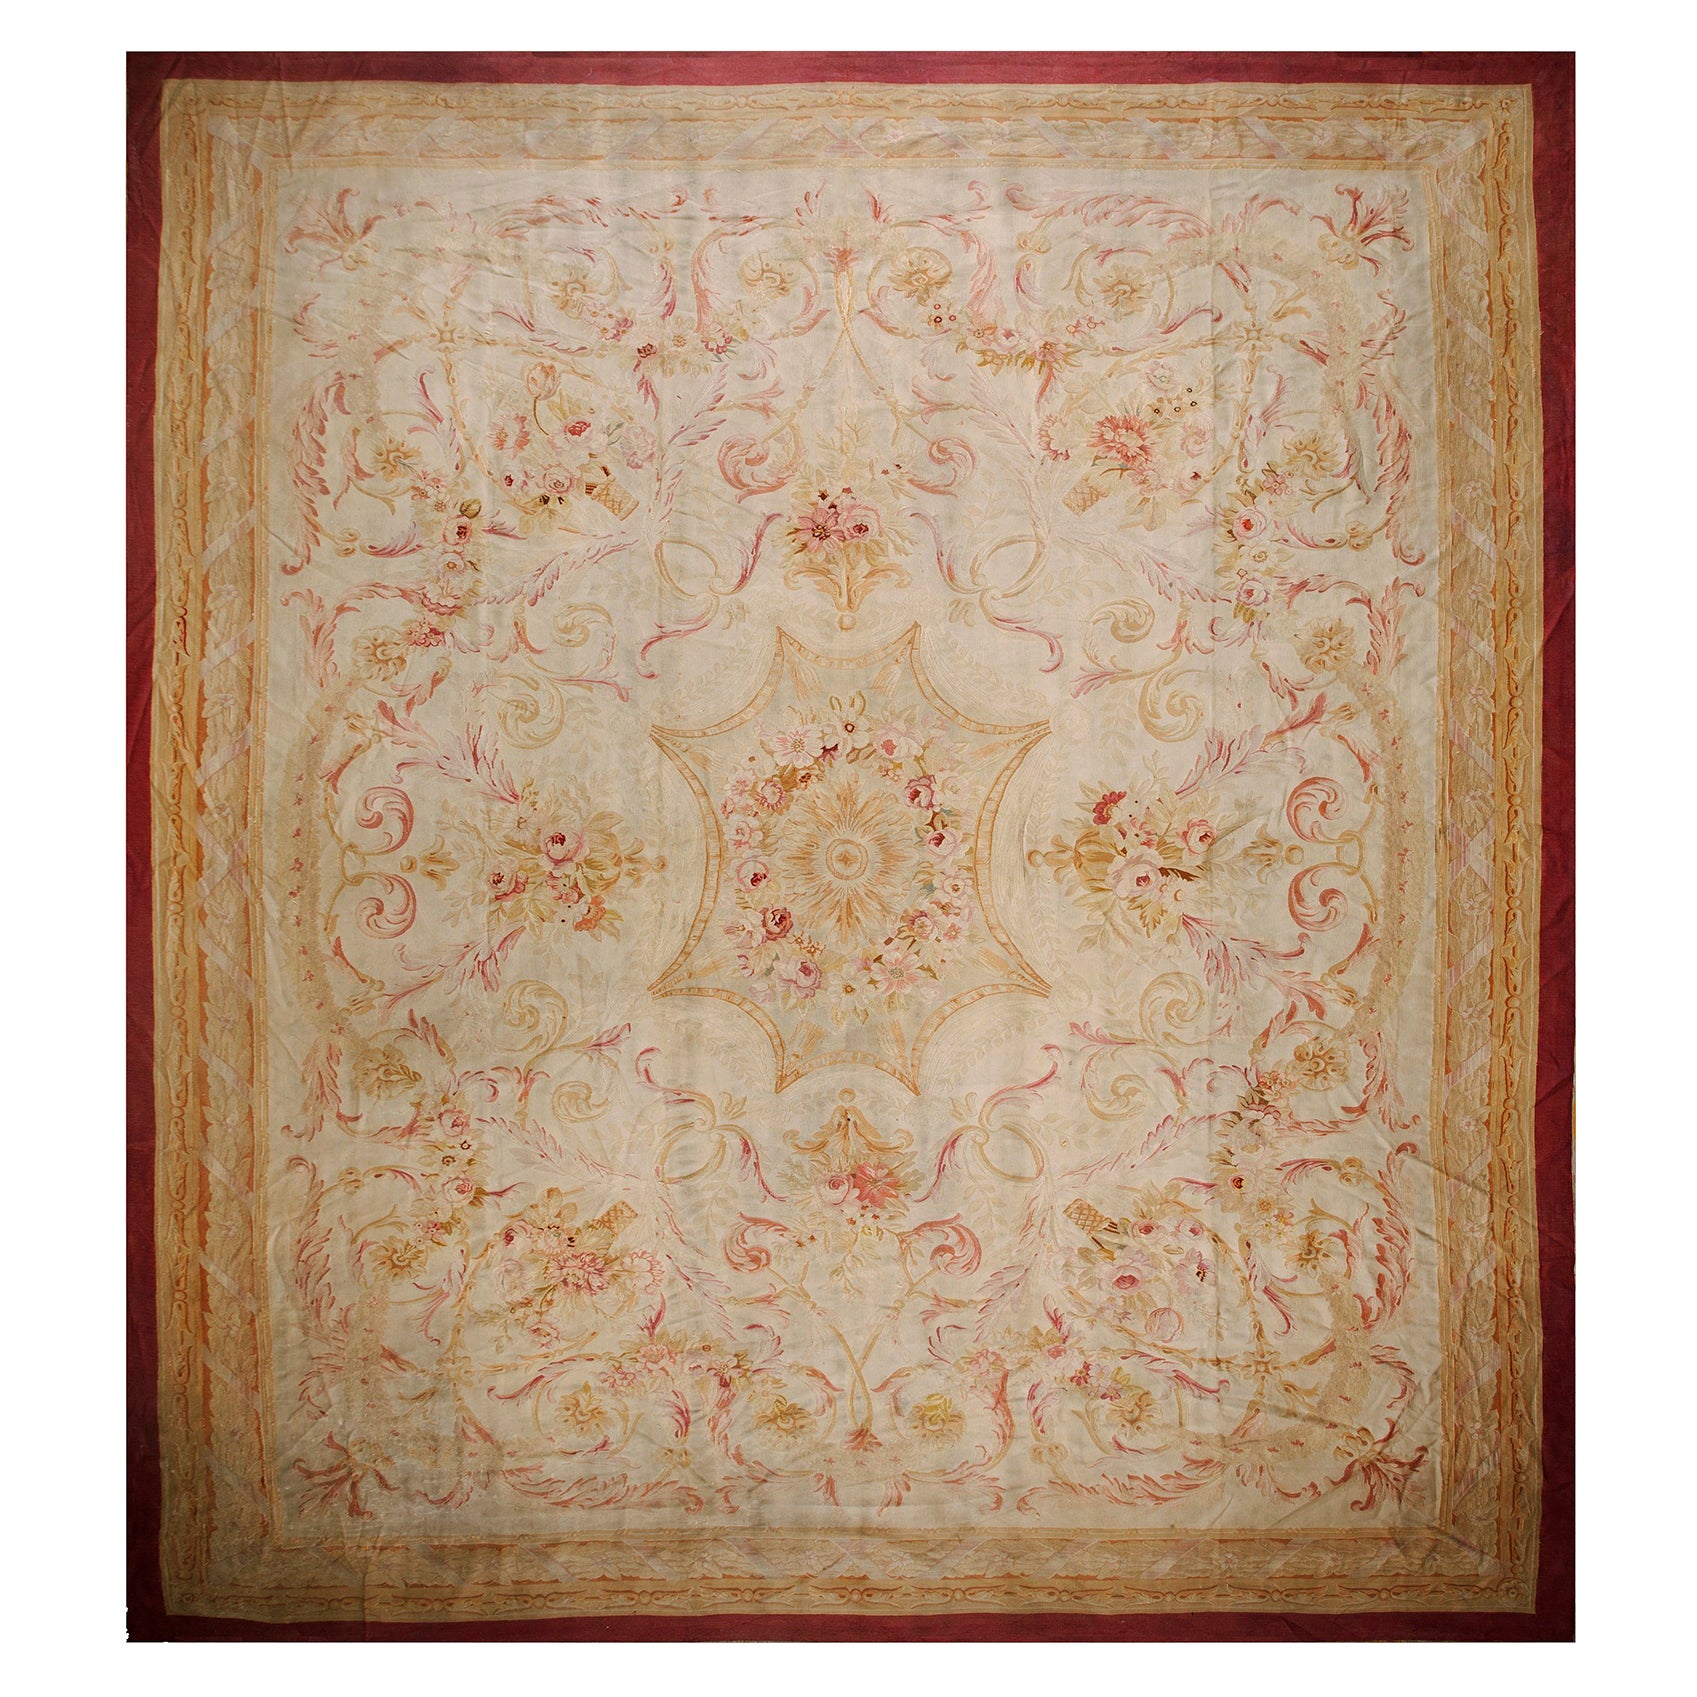 19th Century French Aubusson Carpet ( 13'6" x 14'9" - 421 x 450 cm )